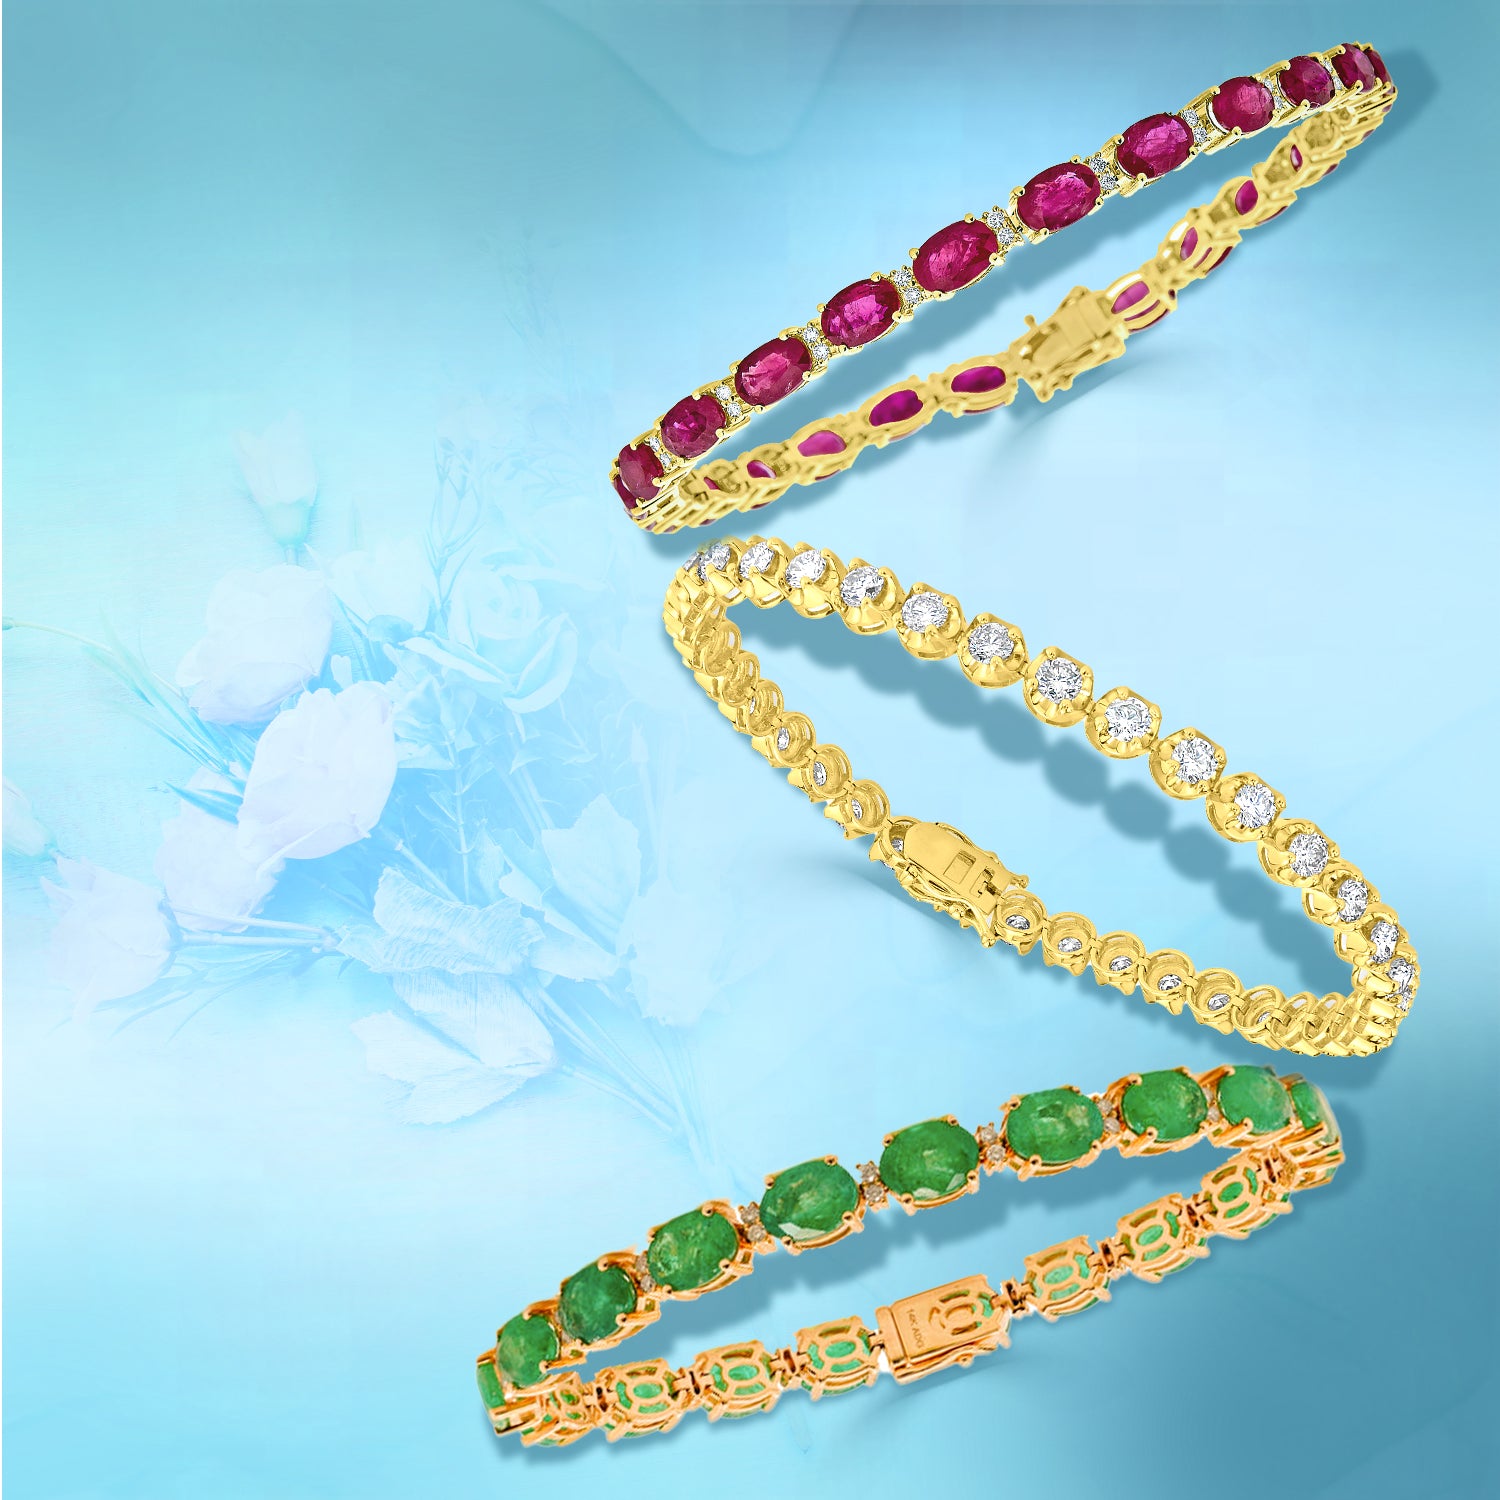 3 Beautiful Bracelets That Embody Brilliance